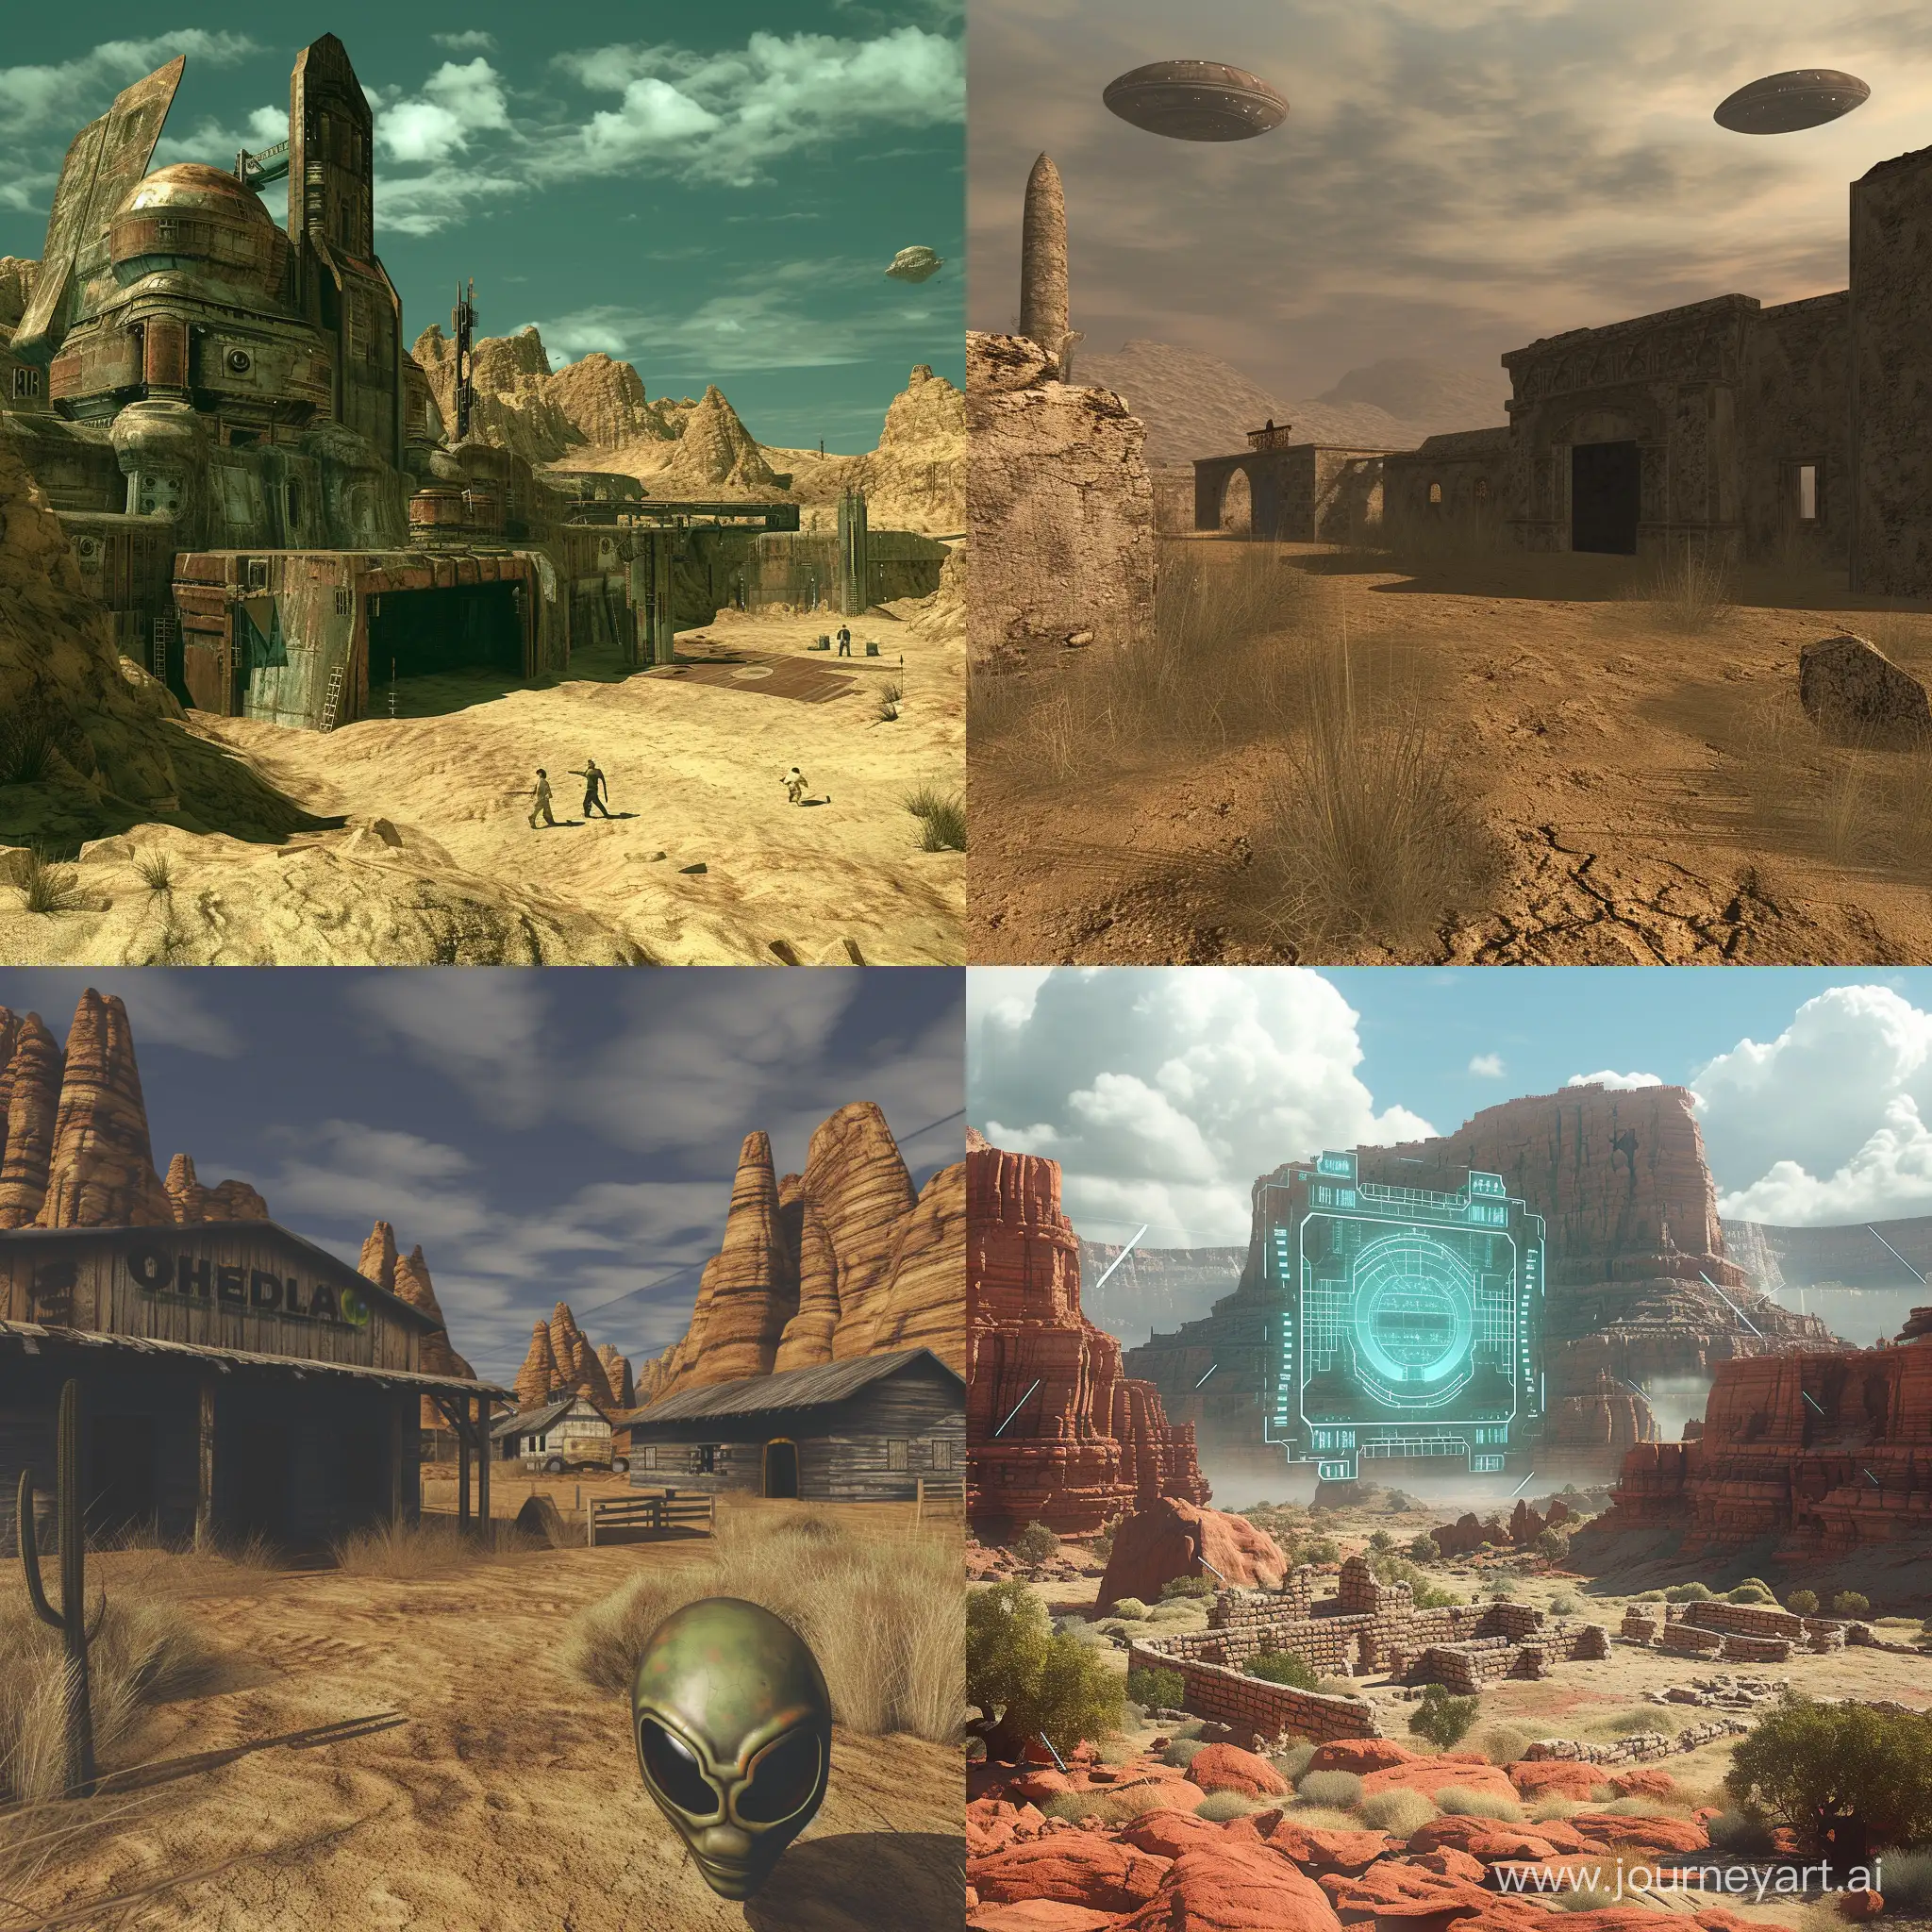 Eerie-3D-Cyberpunk-Horror-Ranch-with-Alien-Ruins-in-a-Desert-Setting